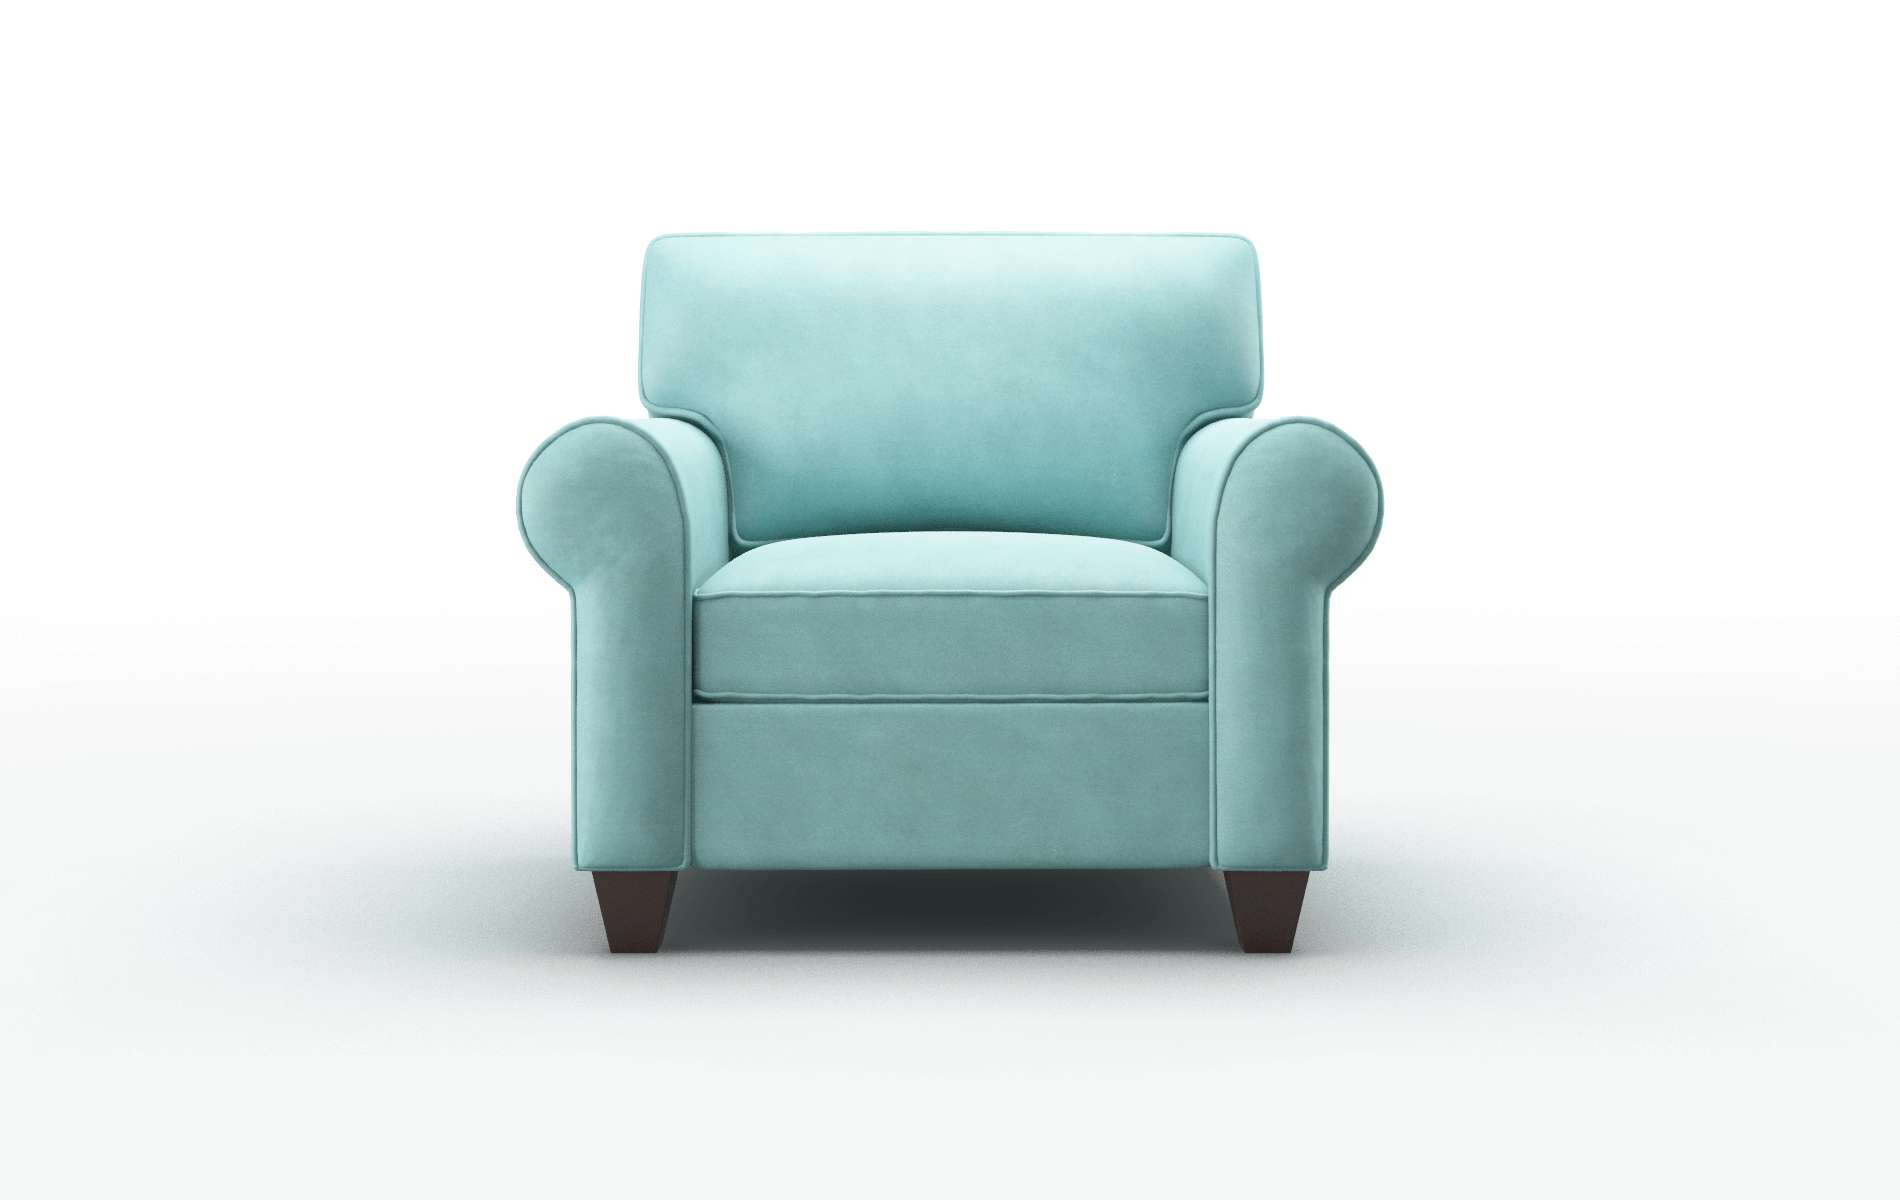 Augusta Curious Turquoise Chair espresso legs 1